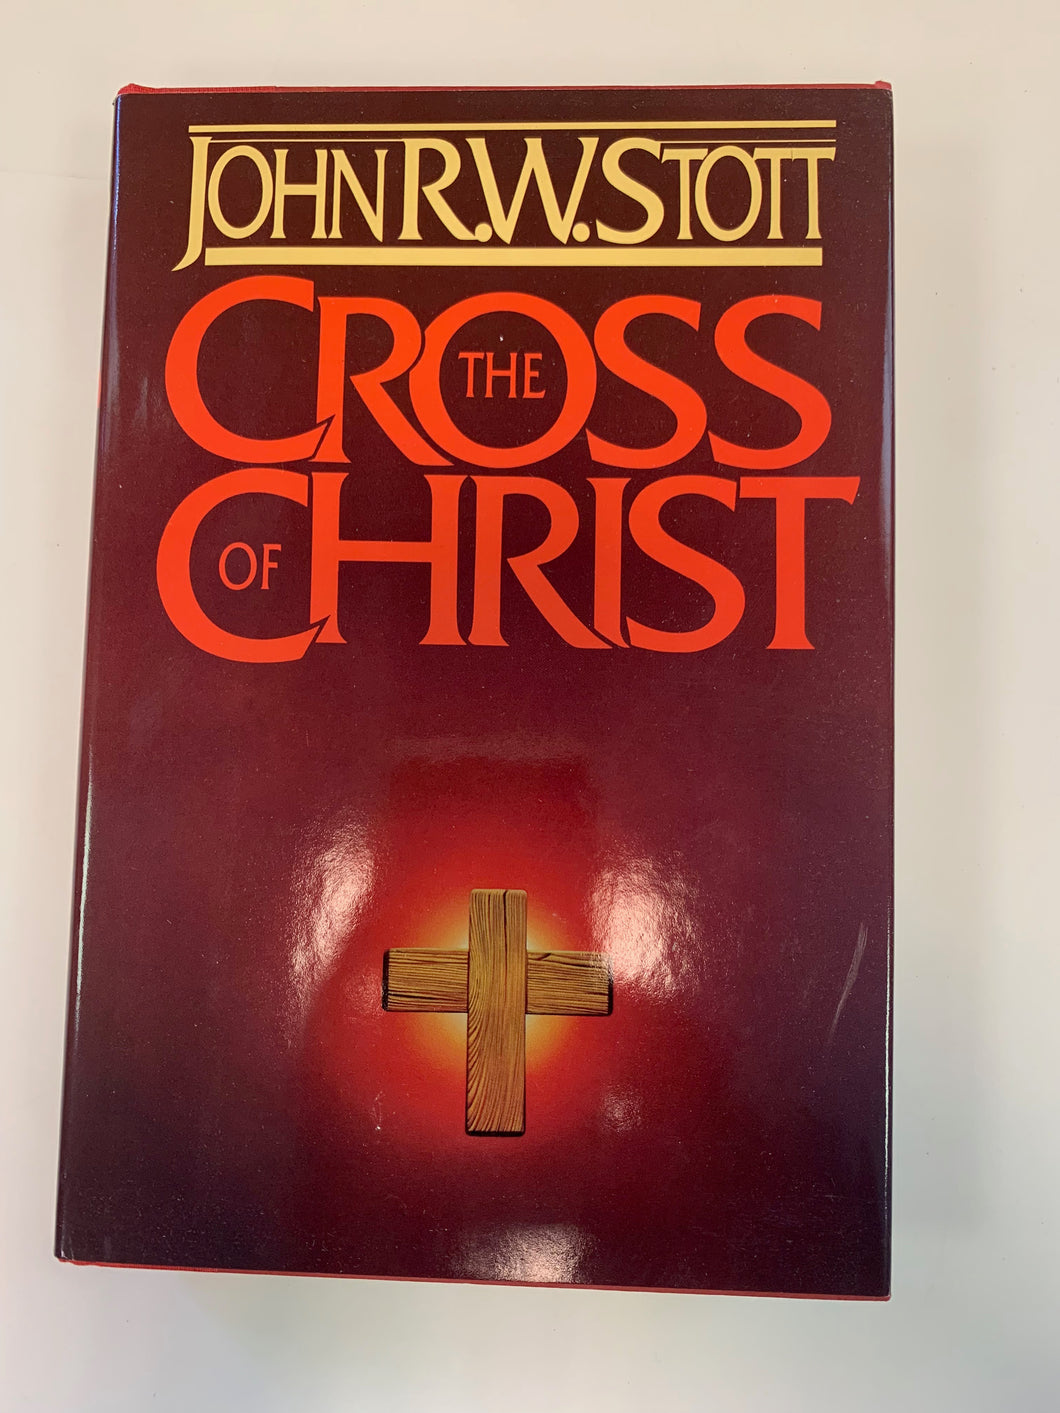 The Cross of Christ by John R. W. Stott